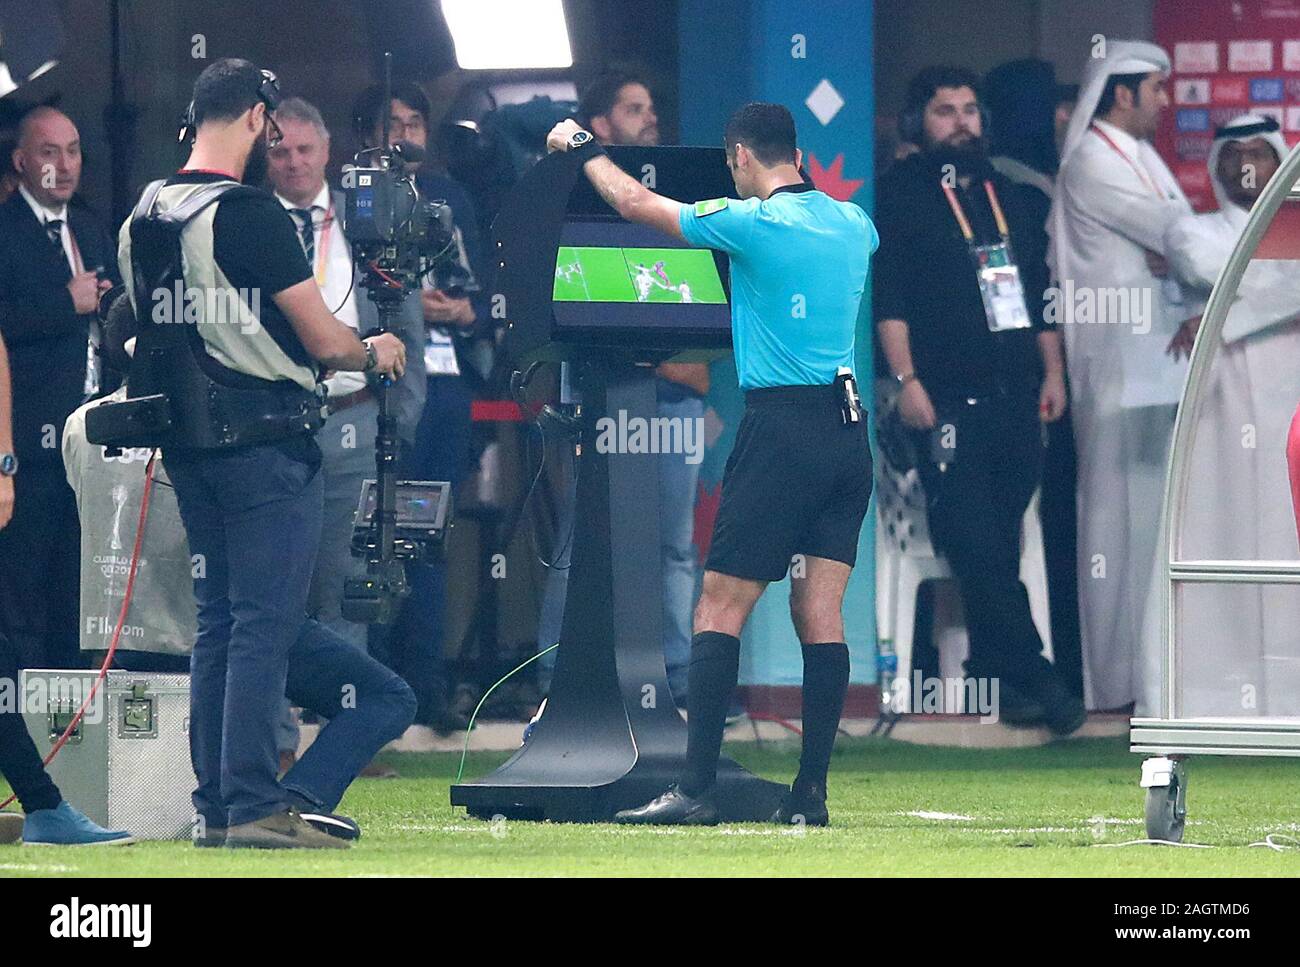 Match referee Abdulrahman Al Jassim consults VAR after an incident involving Liverpool's Sadio Mane and Flamengo's Rafinha during the FIFA Club World Cup final at the Khalifa International Stadium, Doha. Stock Photo